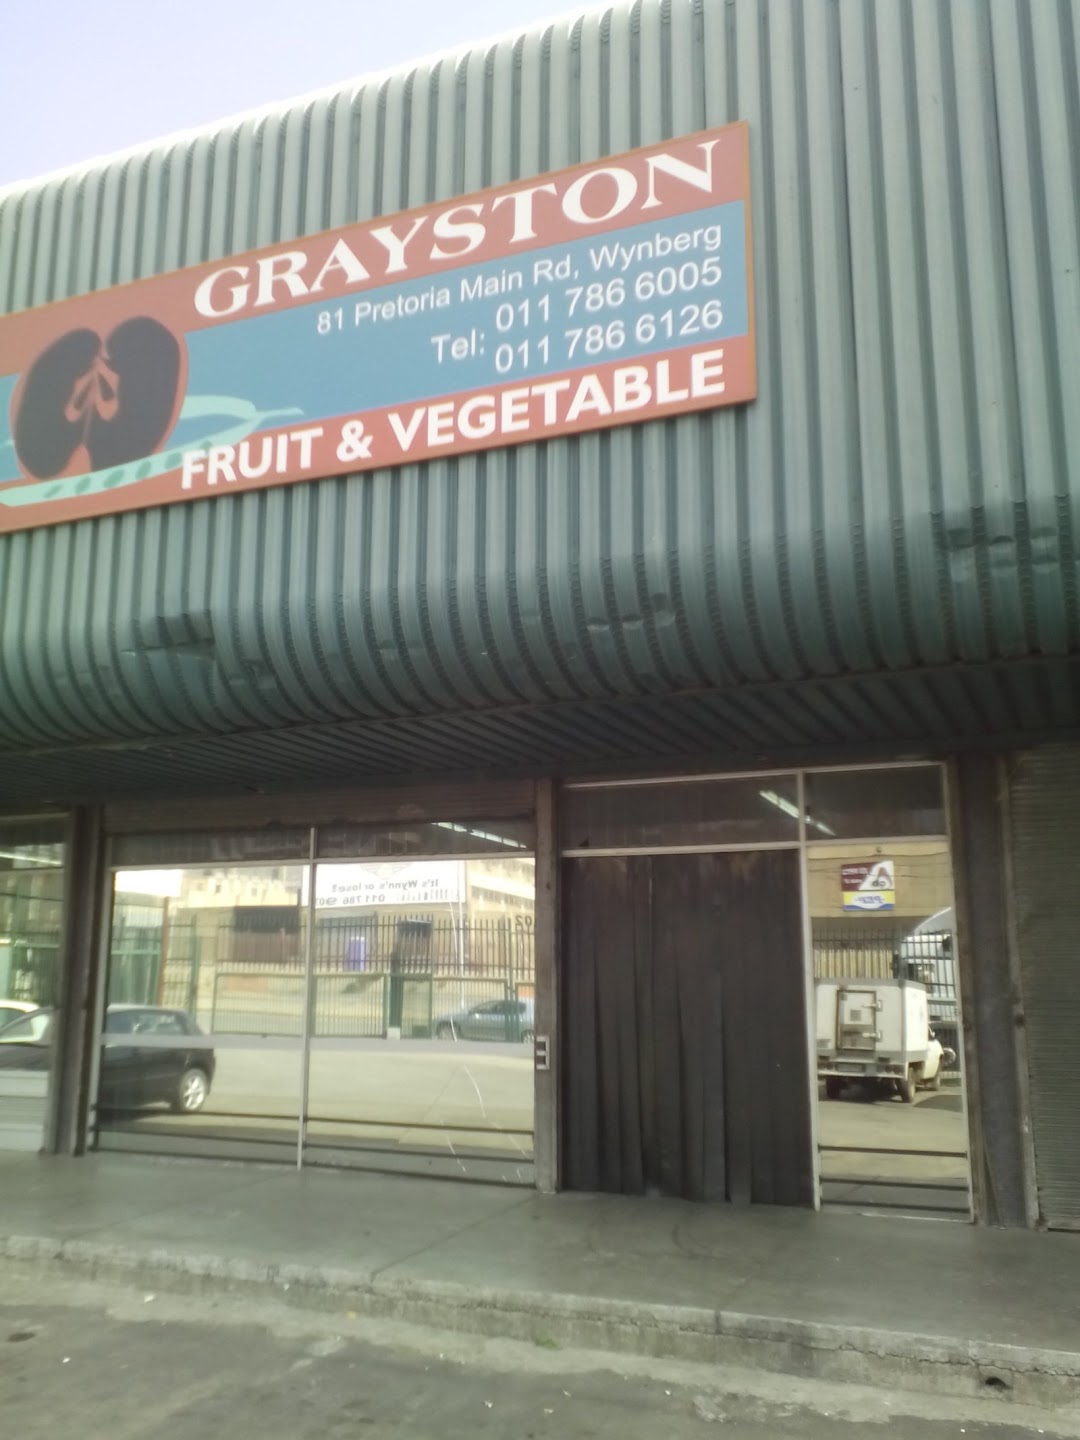 Grayston Fruit & Vegetable